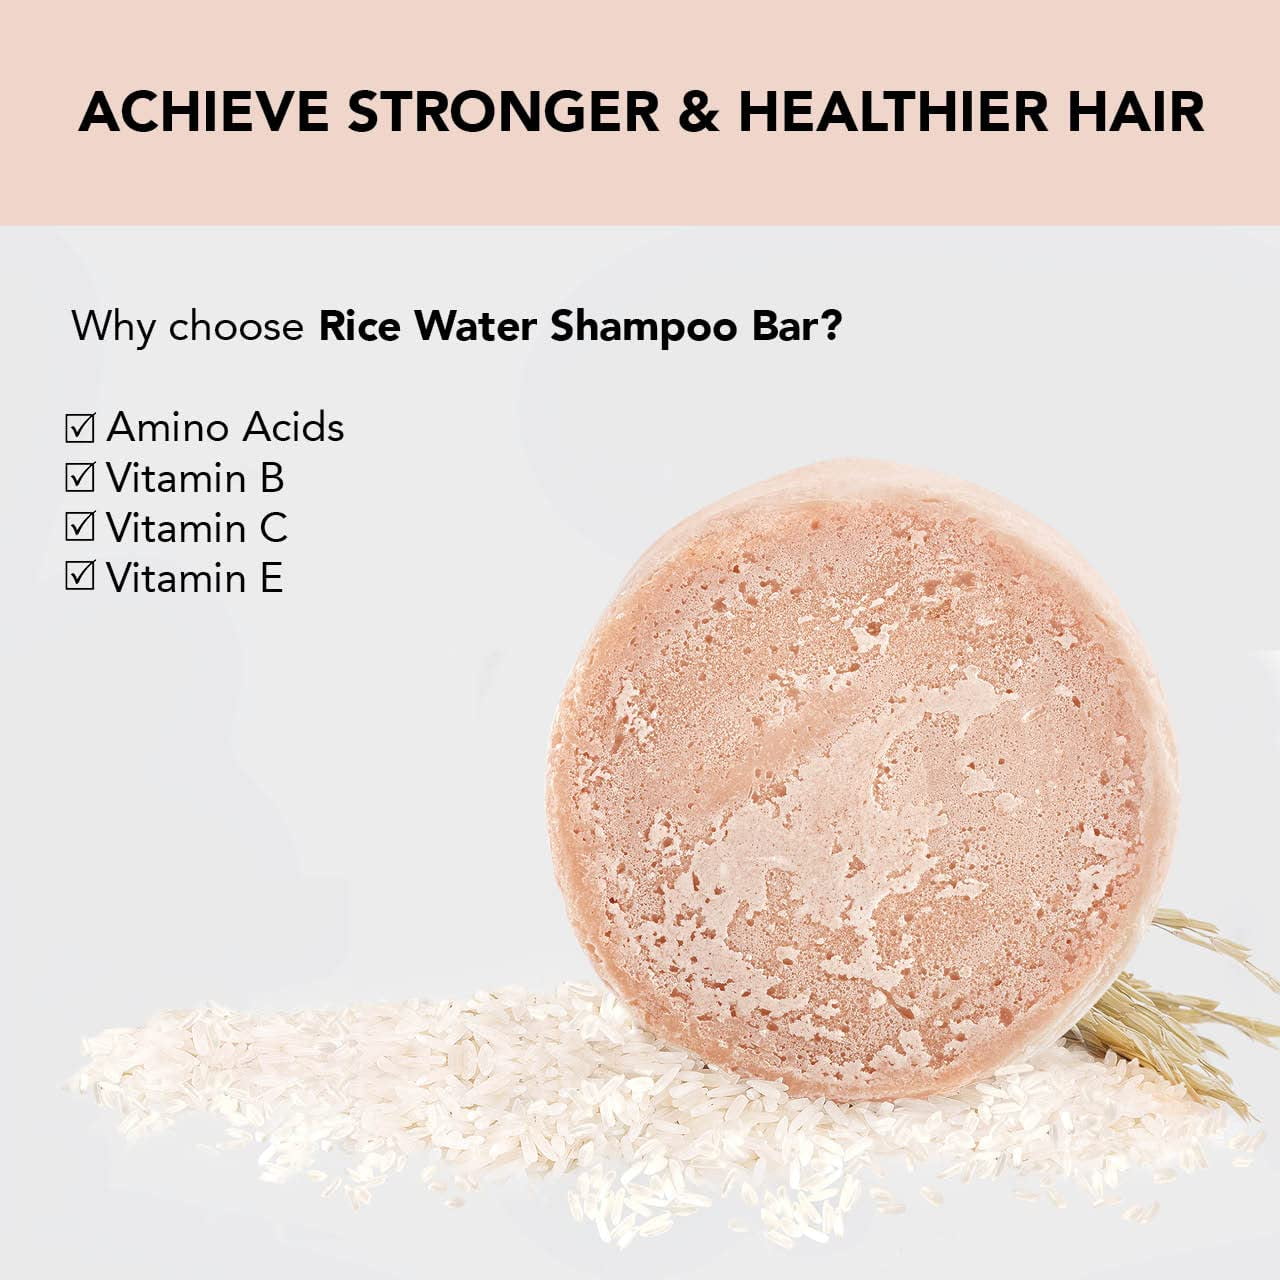 Kitsch Rice Water Protein Shampoo Bar